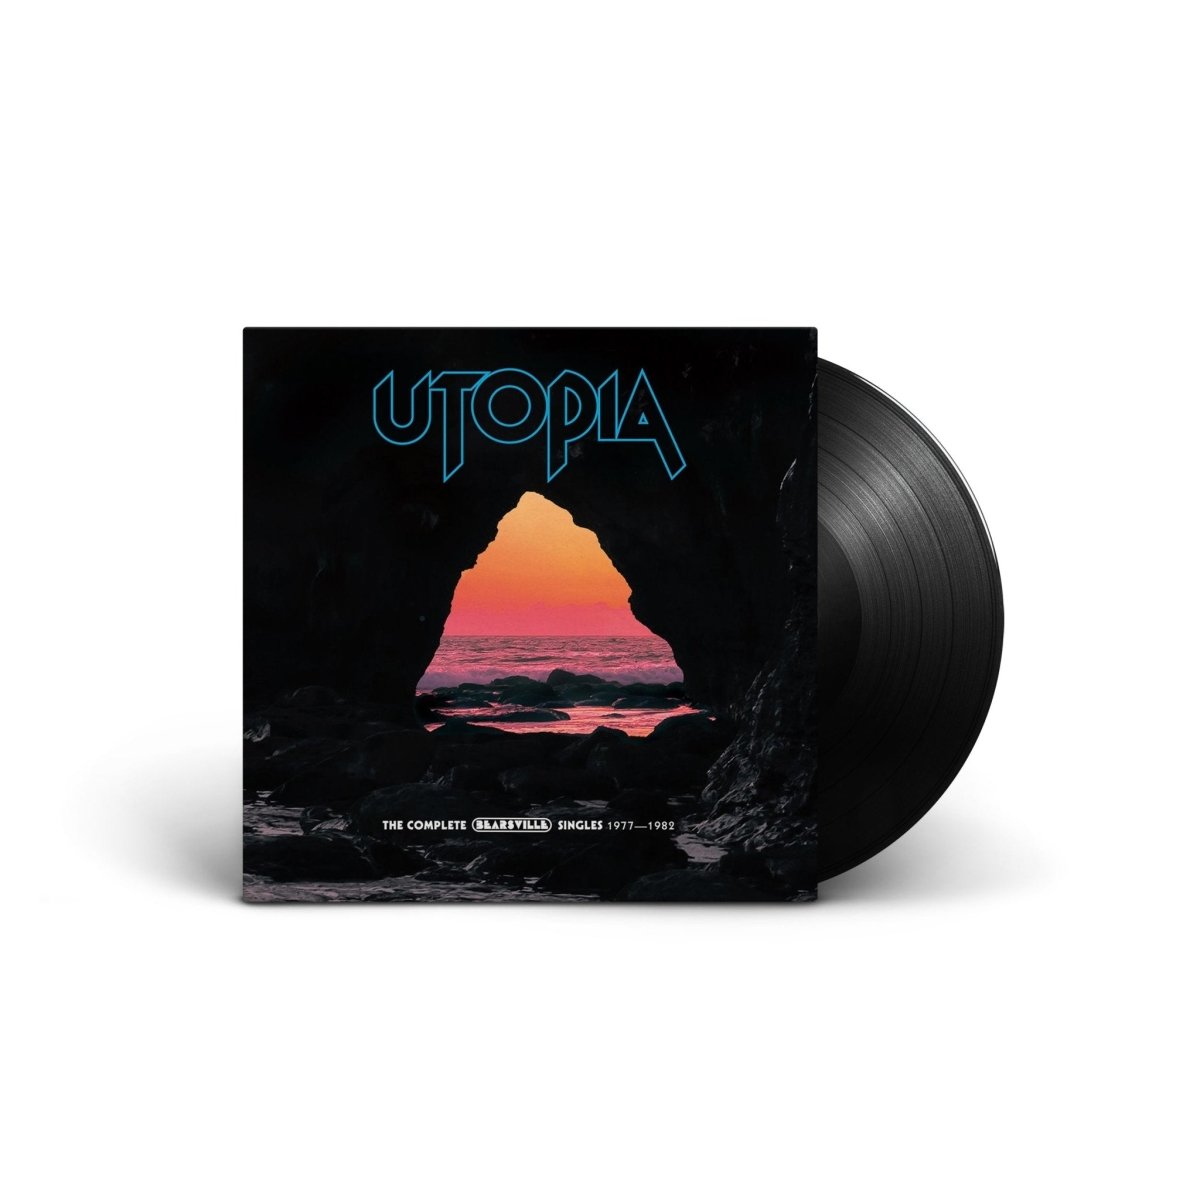 Utopia - The Complete Bearsville Singles 1977-1982 Records & LPs Vinyl